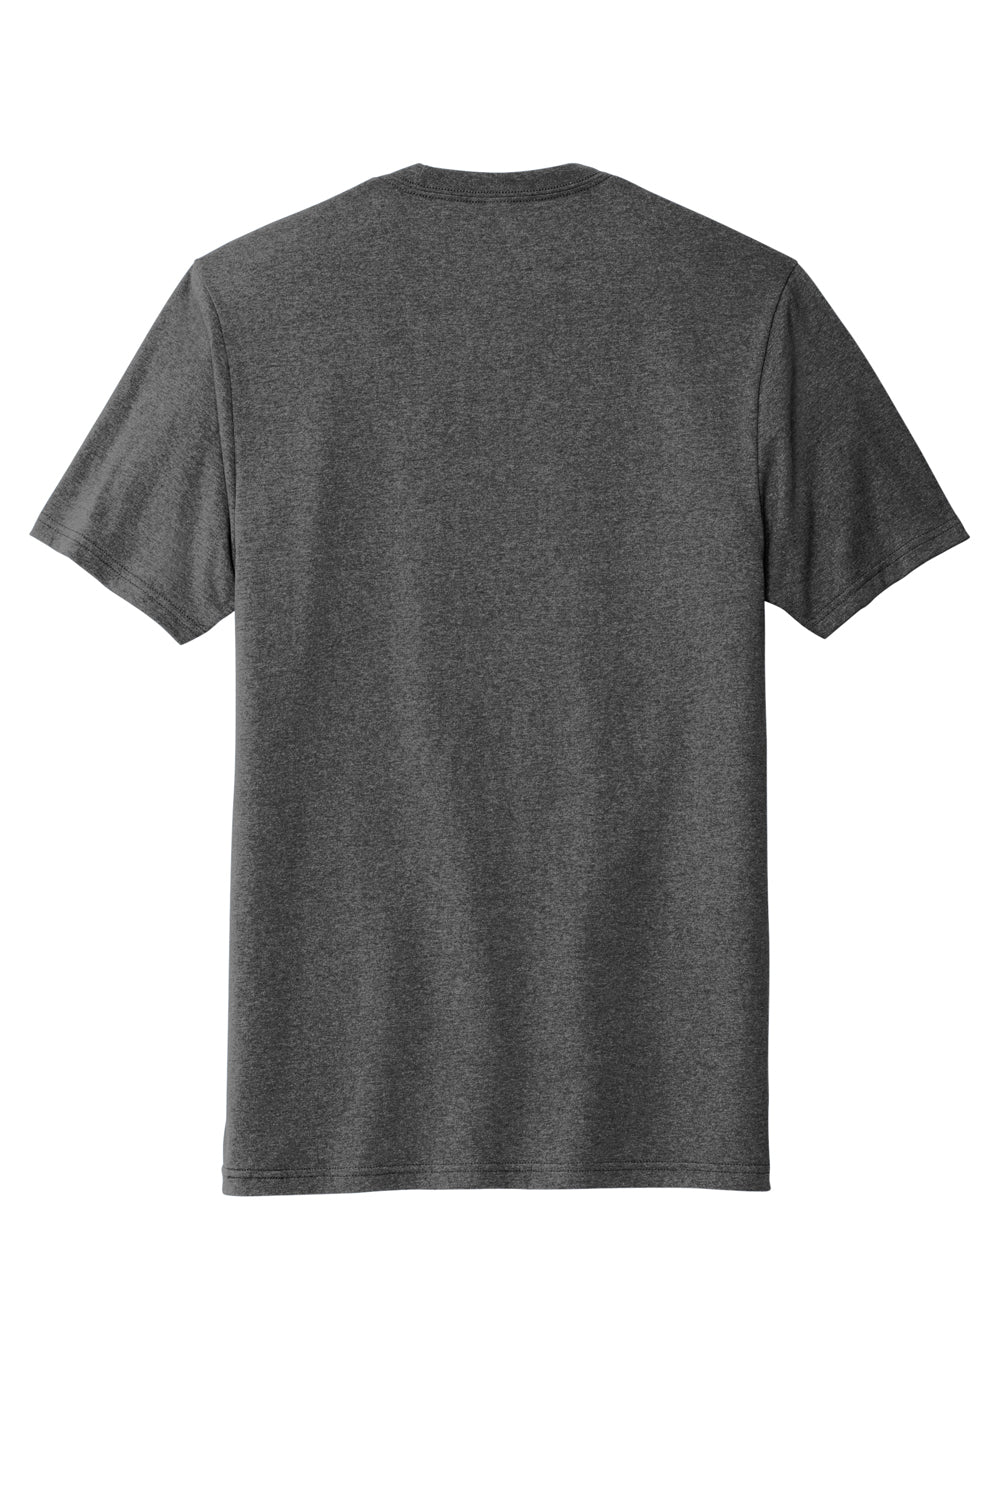 Allmade AL2300 Mens Recycled Short Sleeve Crewneck T-Shirt Heather Charcoal Grey Flat Back